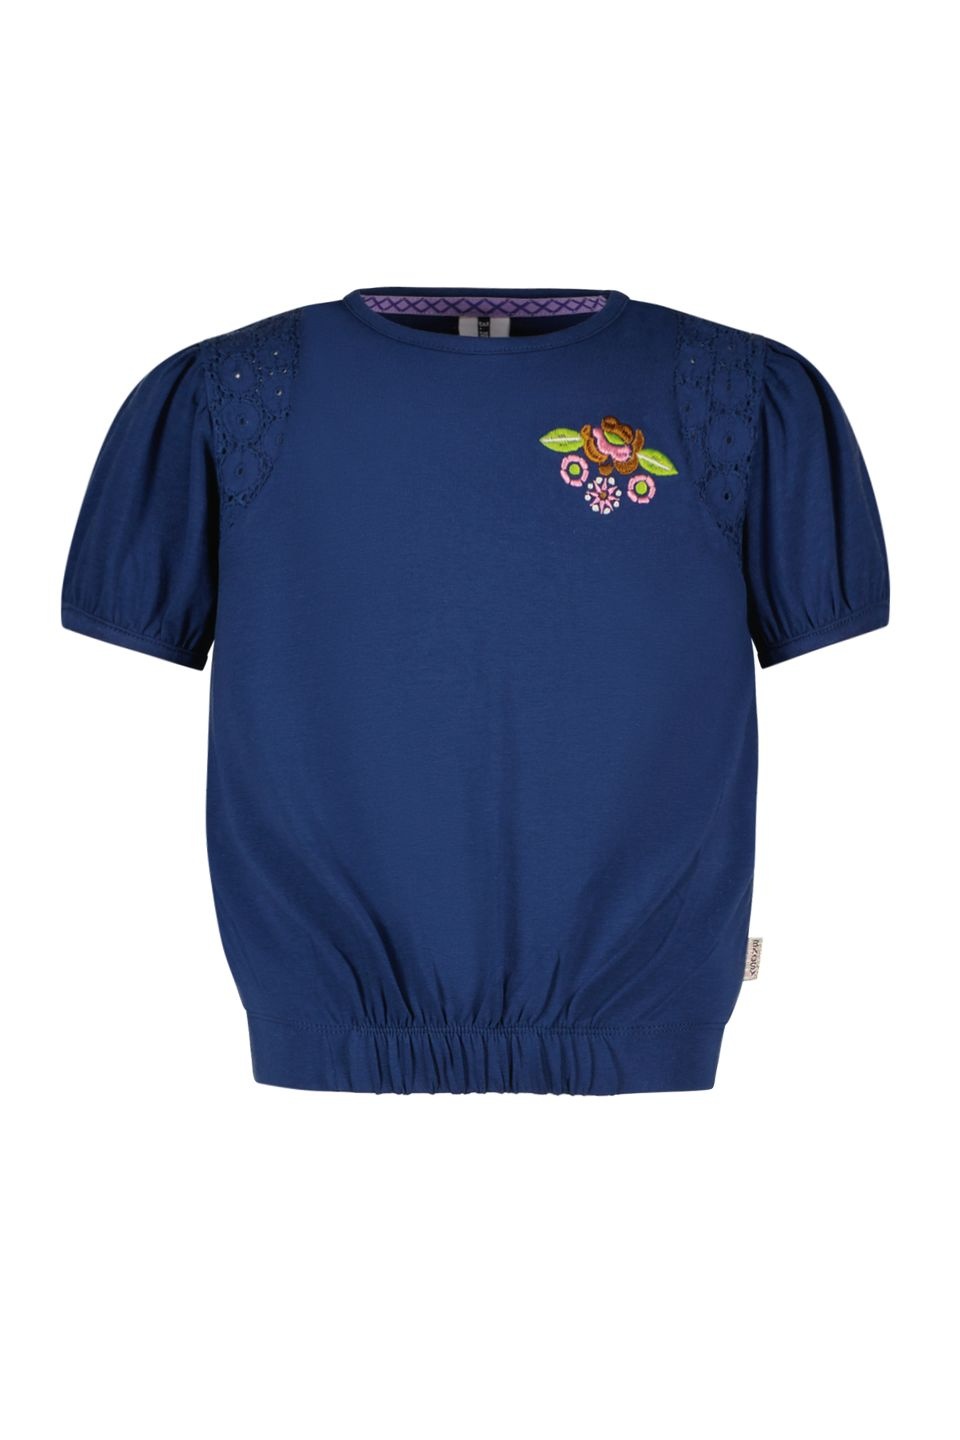 B.Nosy Meisjes t-shirt - Guusje - Lake blauw